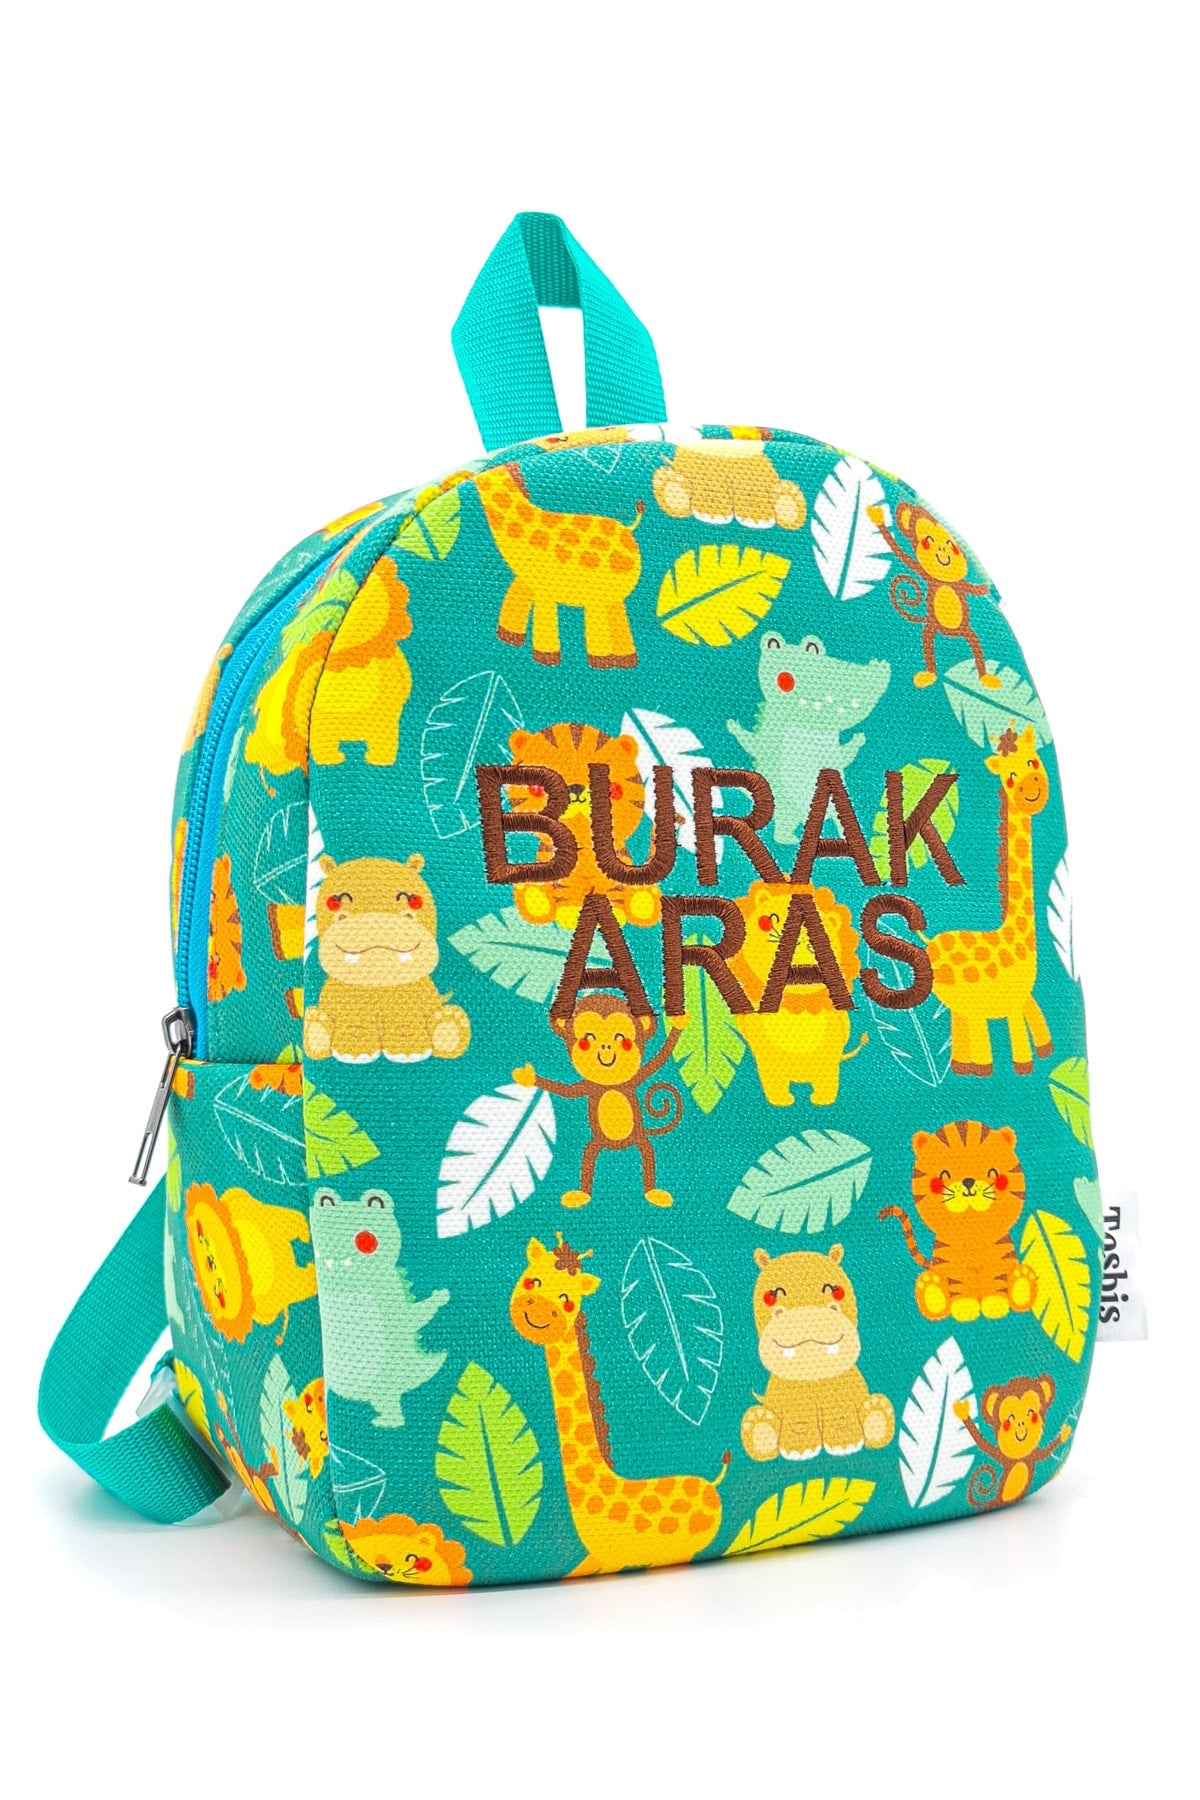 [ We Write Any Name You Want ] Cute Animals 0-8 Years Old Child Backpack, Kindergarten-Nursery Bag